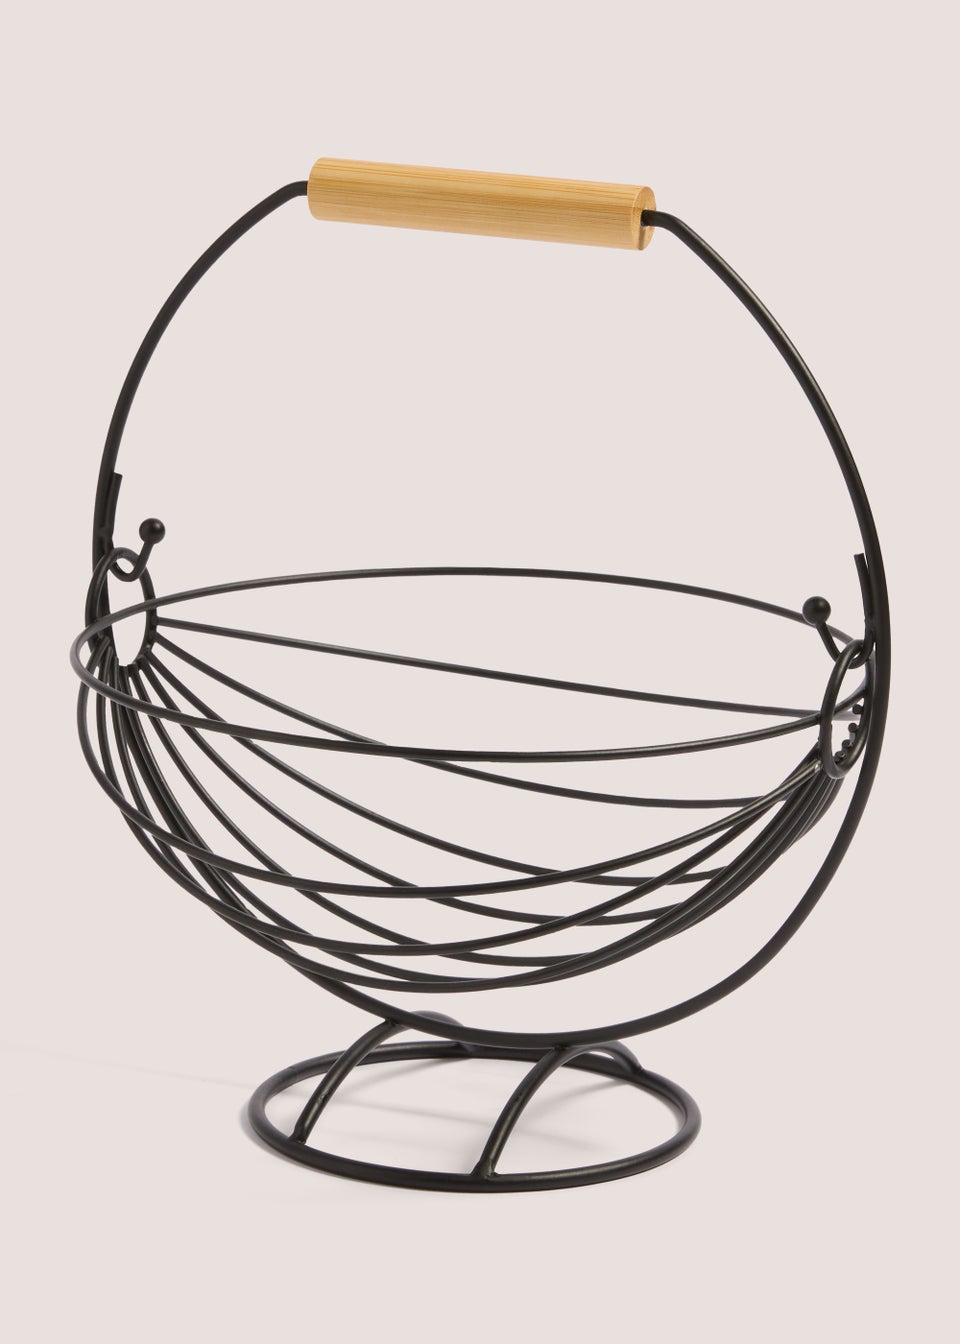 Black Wire Small Hanging Fruit Basket (28cm x 24.5cm x 23cm)